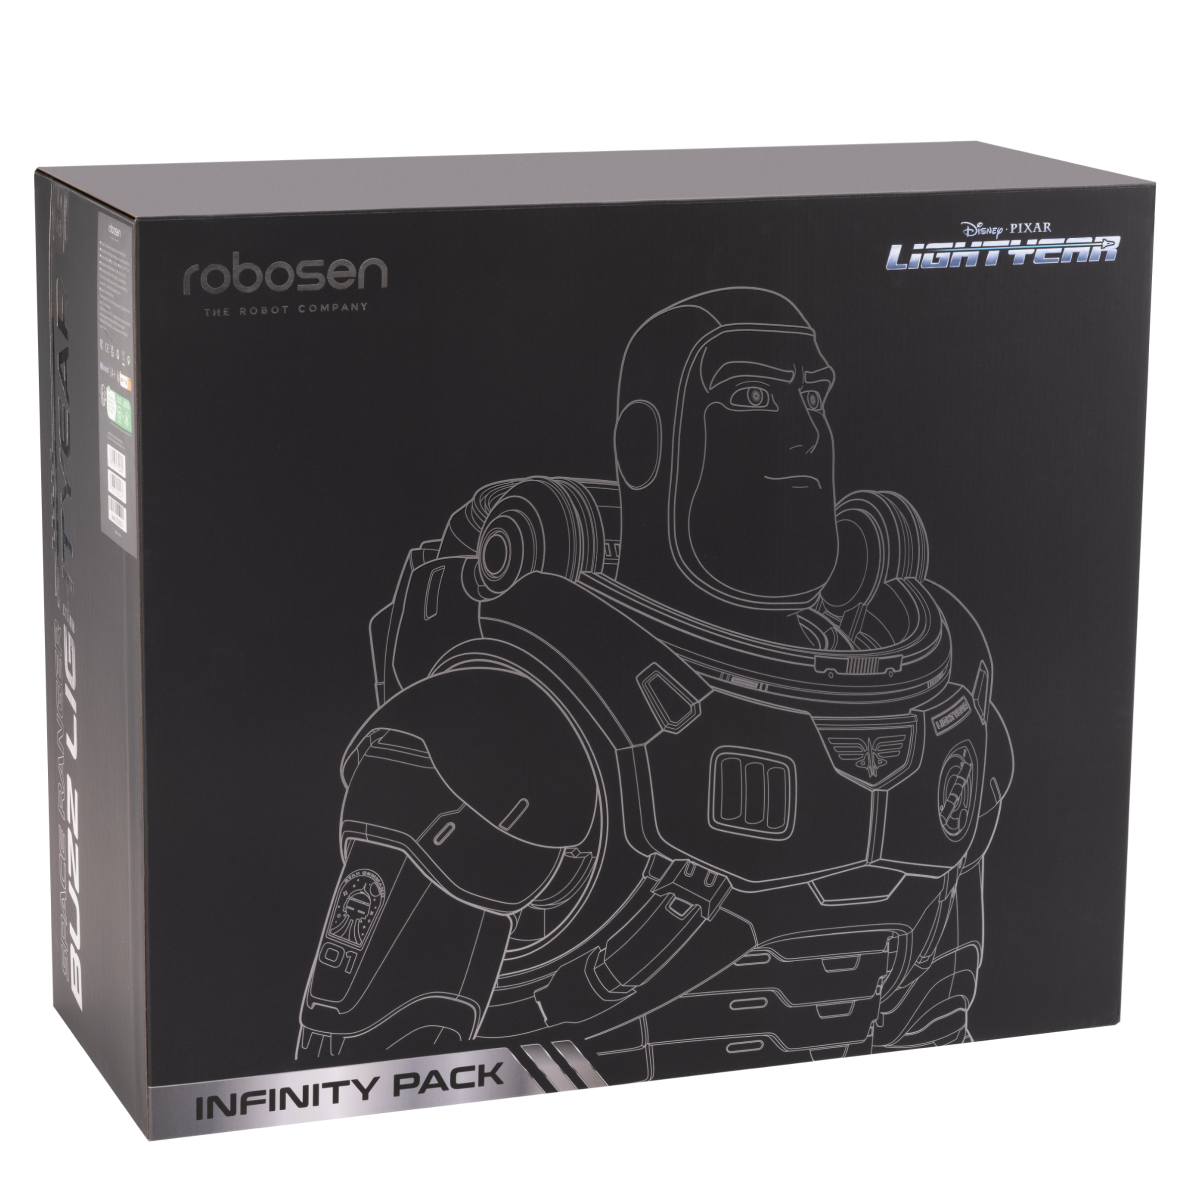 Robosen Buzz Lightyear Infinity Pack (Limited Edition)